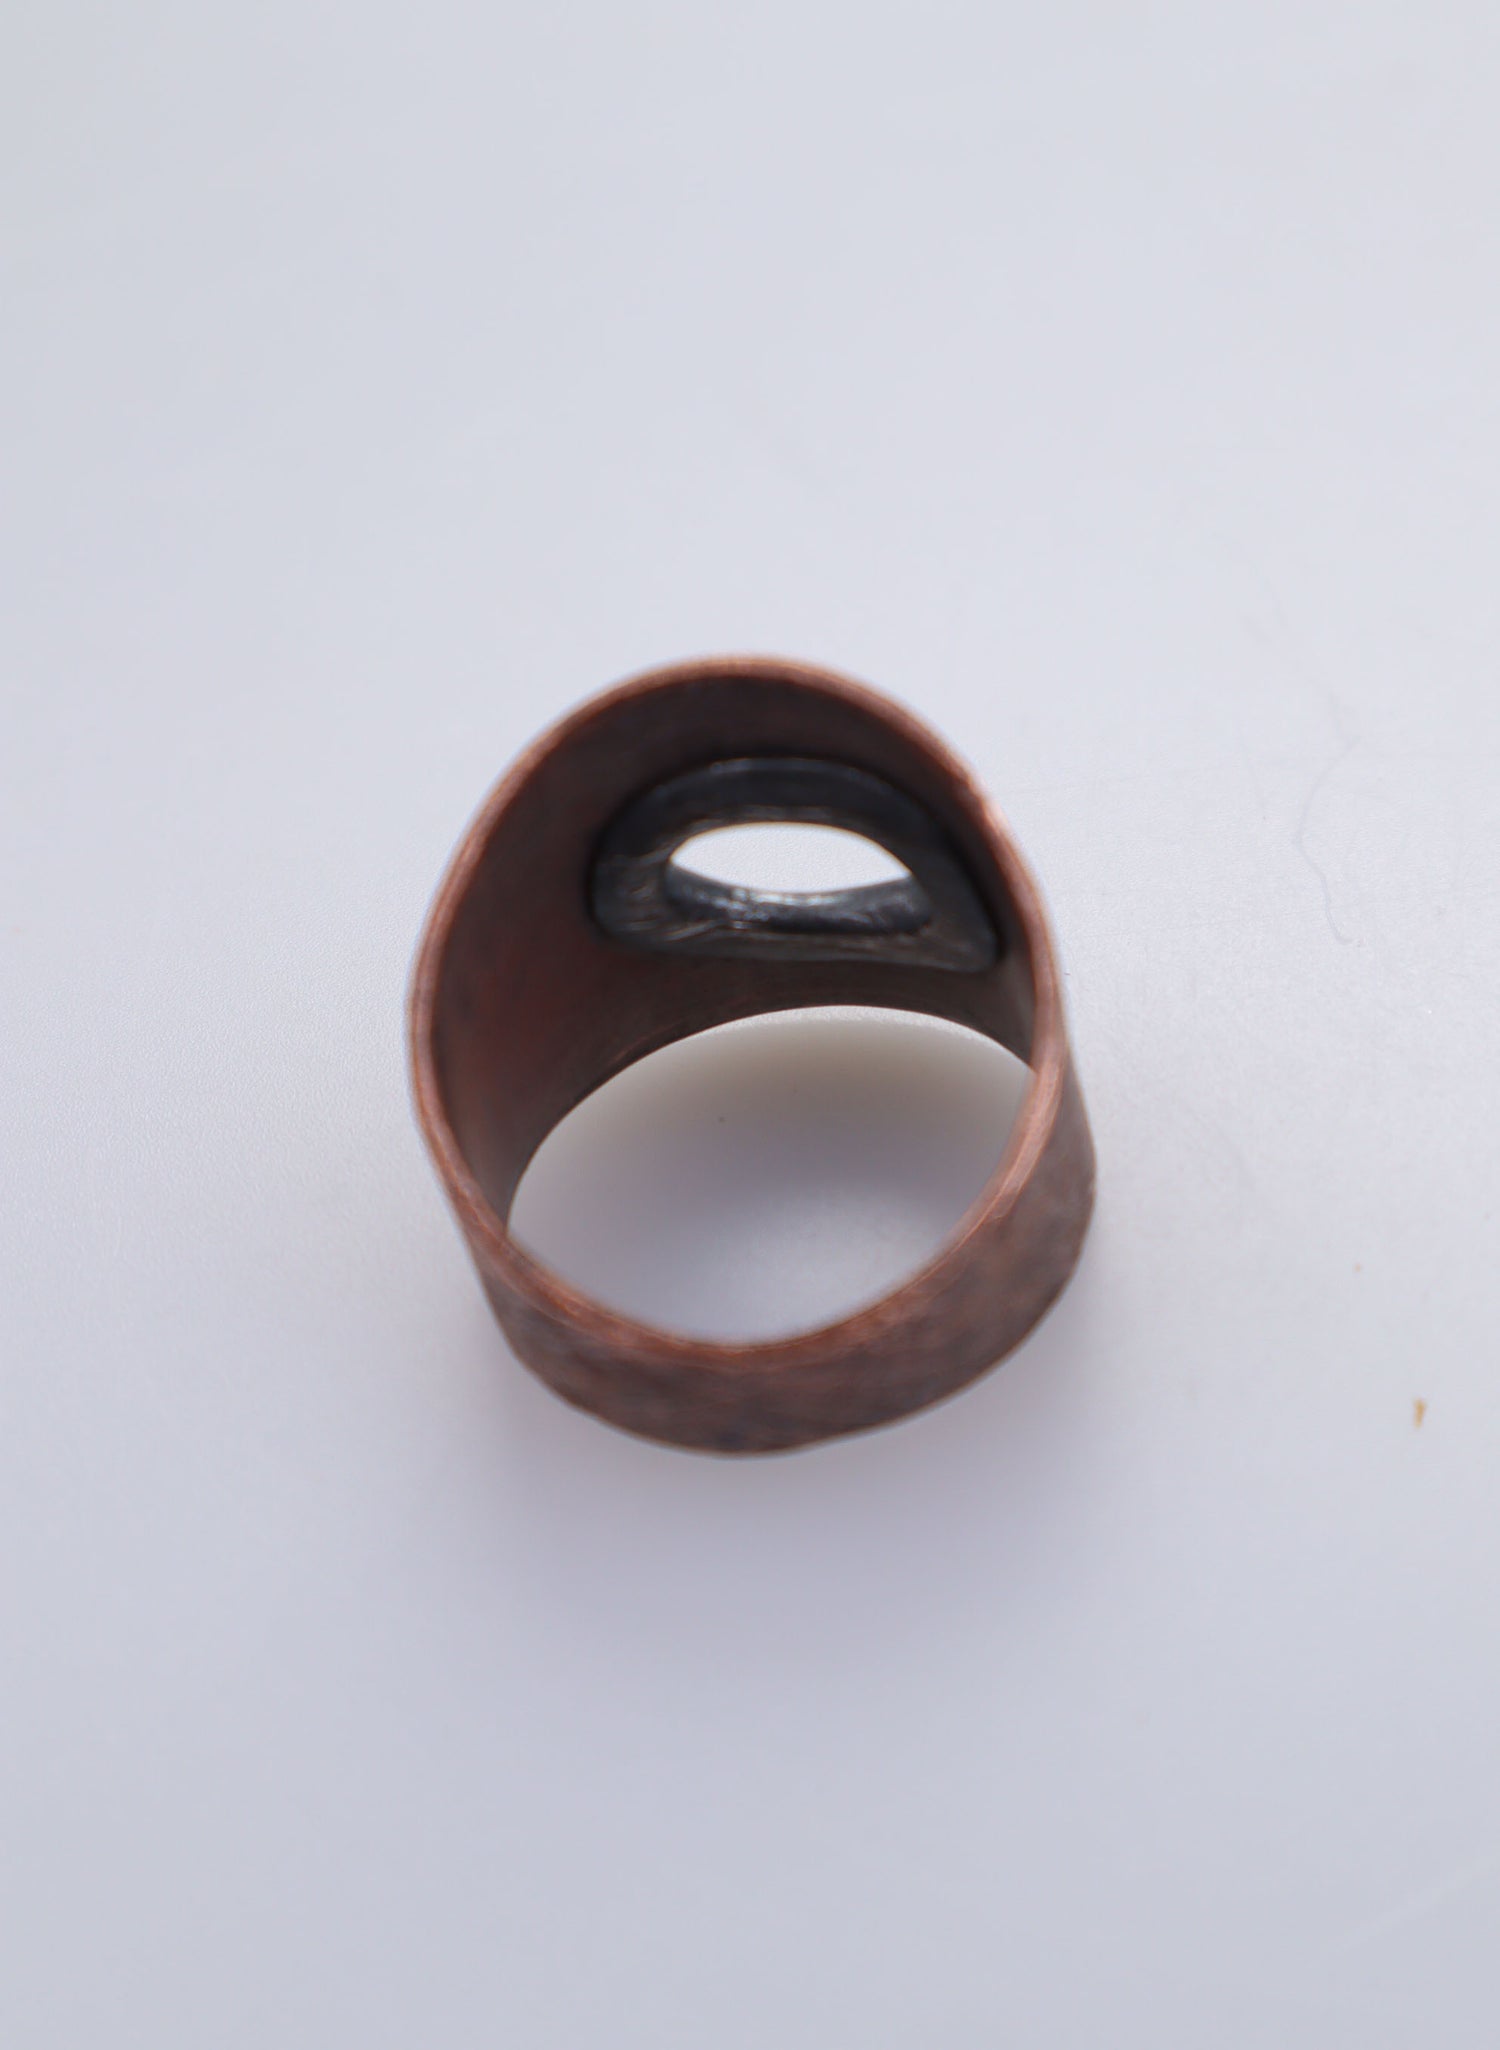 Copper/Silver Rivet Ring - Large